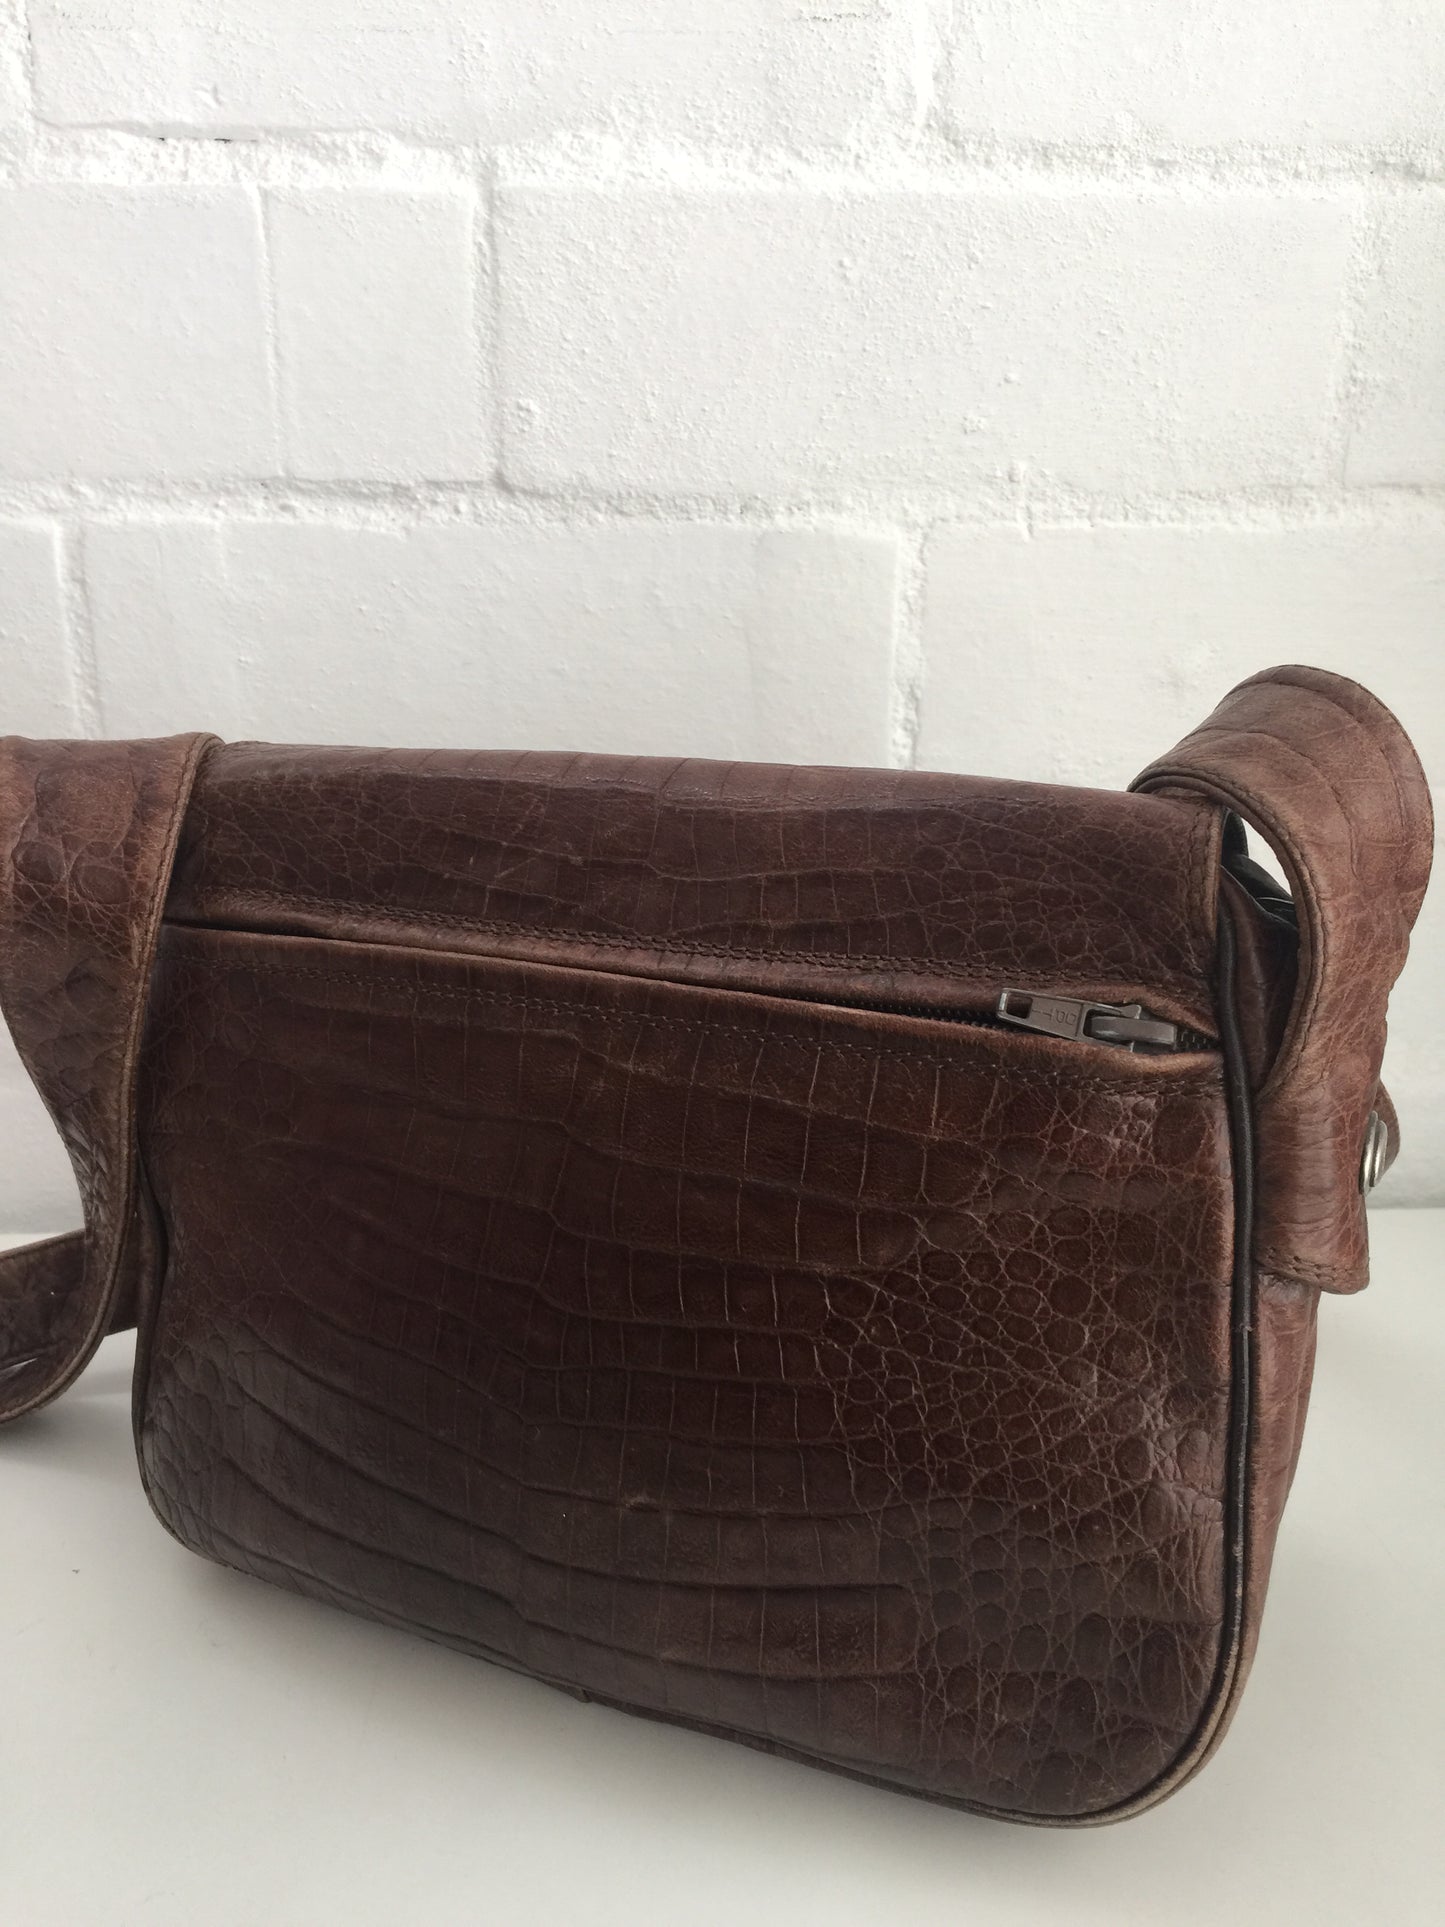 Made in ITALY Handbag Genuine LEATHER Rustic Bag